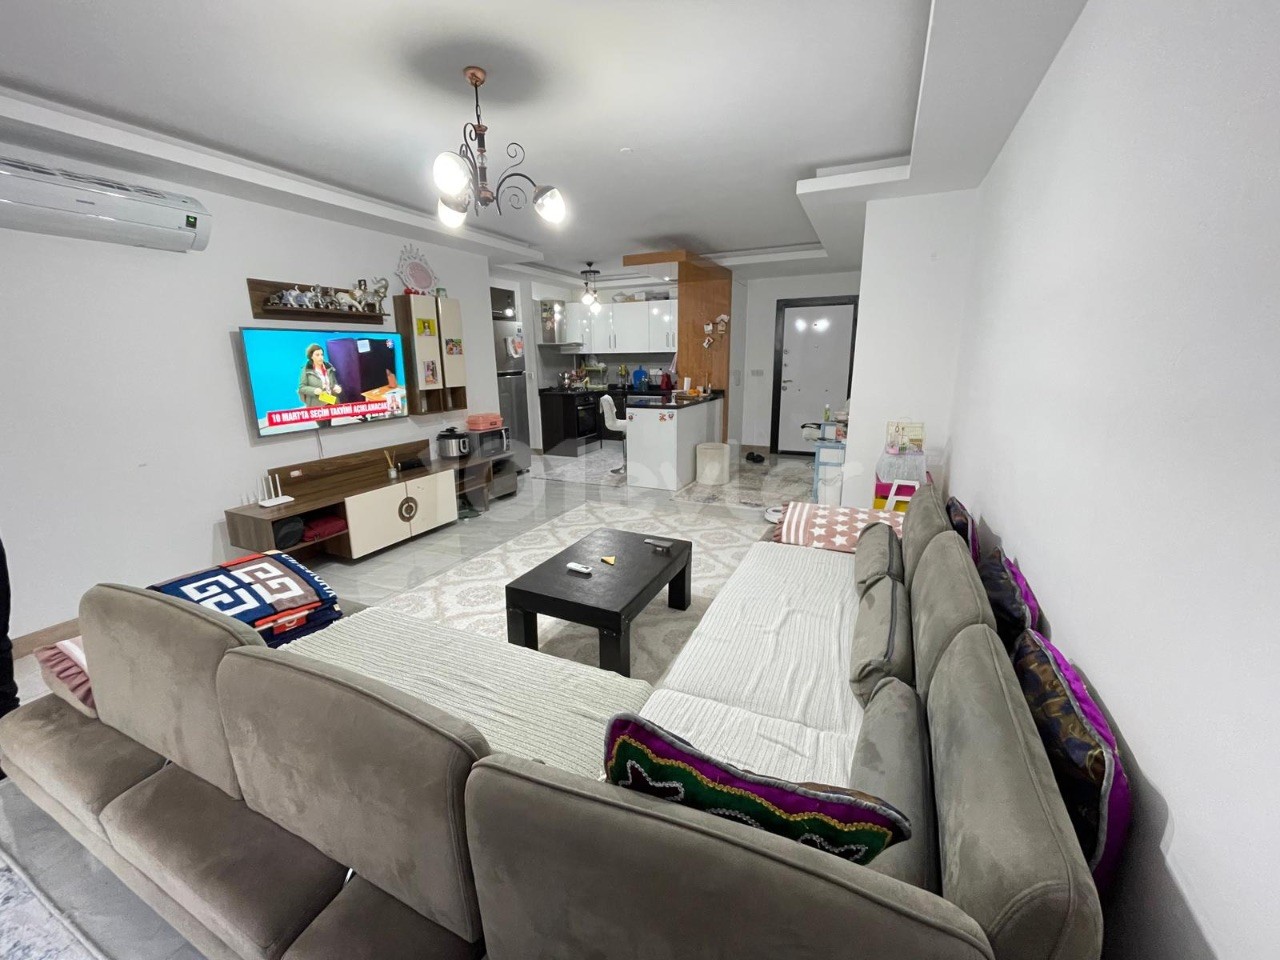 3 bedroom flat for rent near baris park